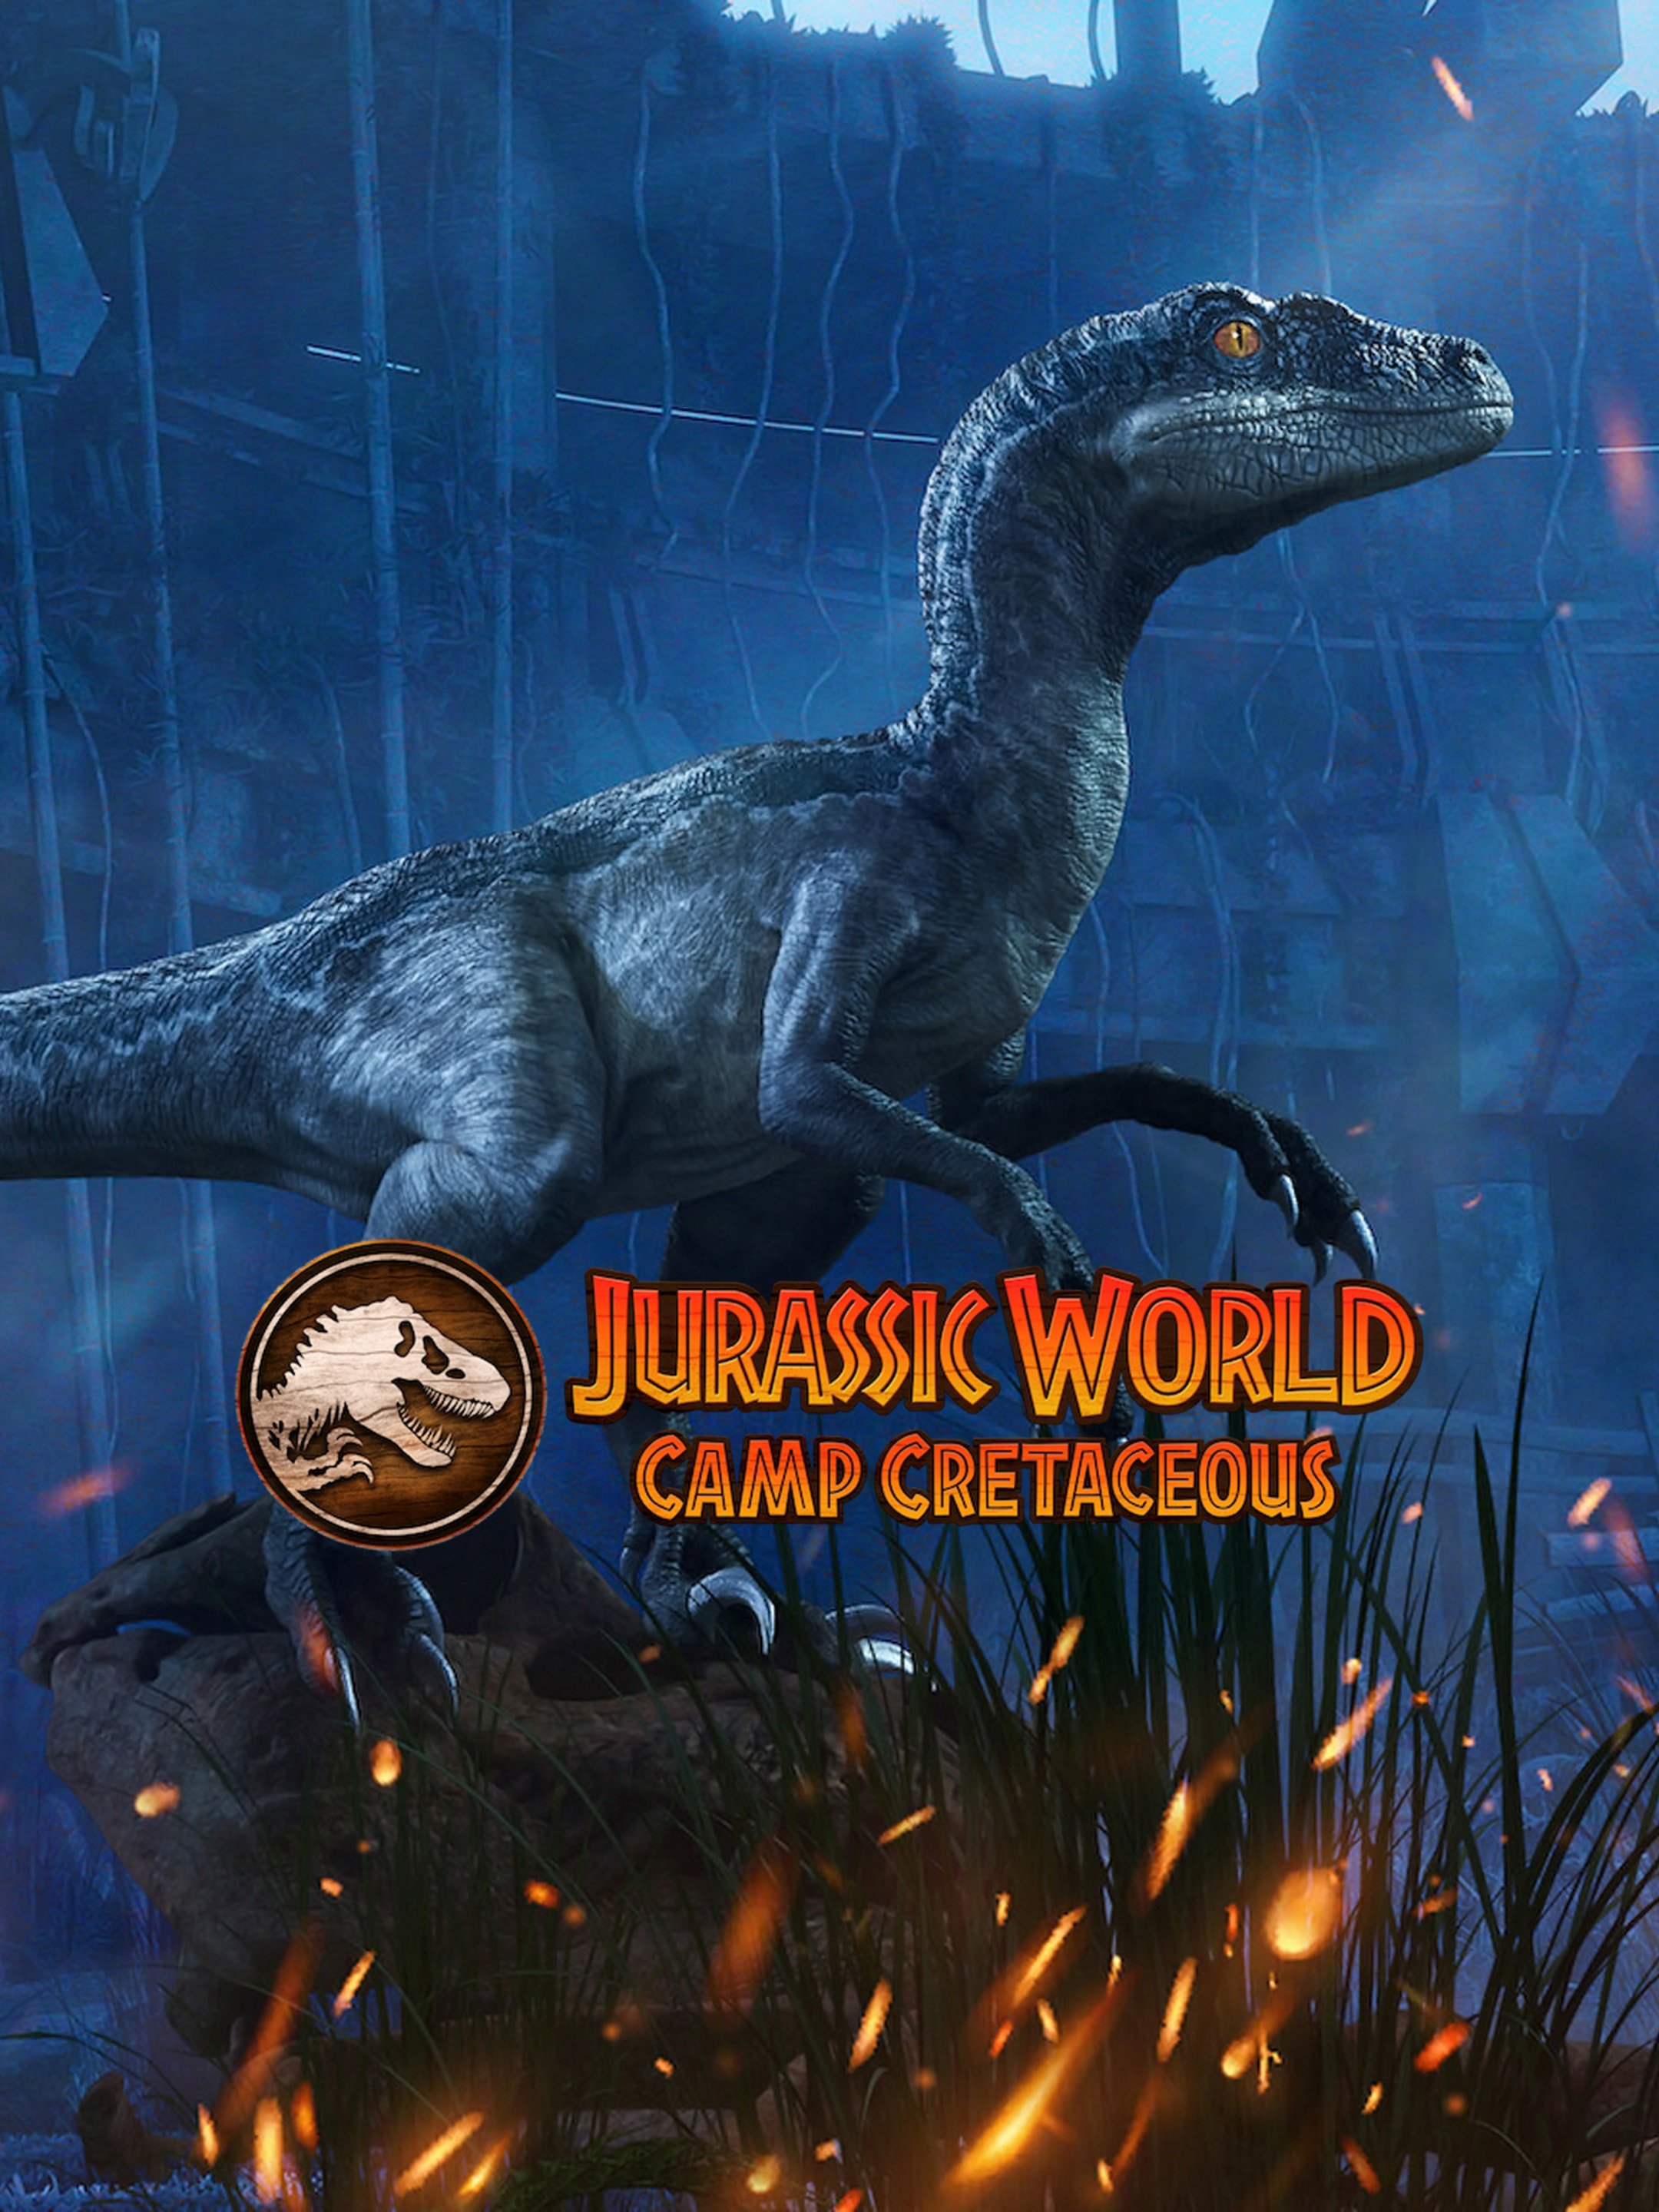 Jurassic world camp cretaceous